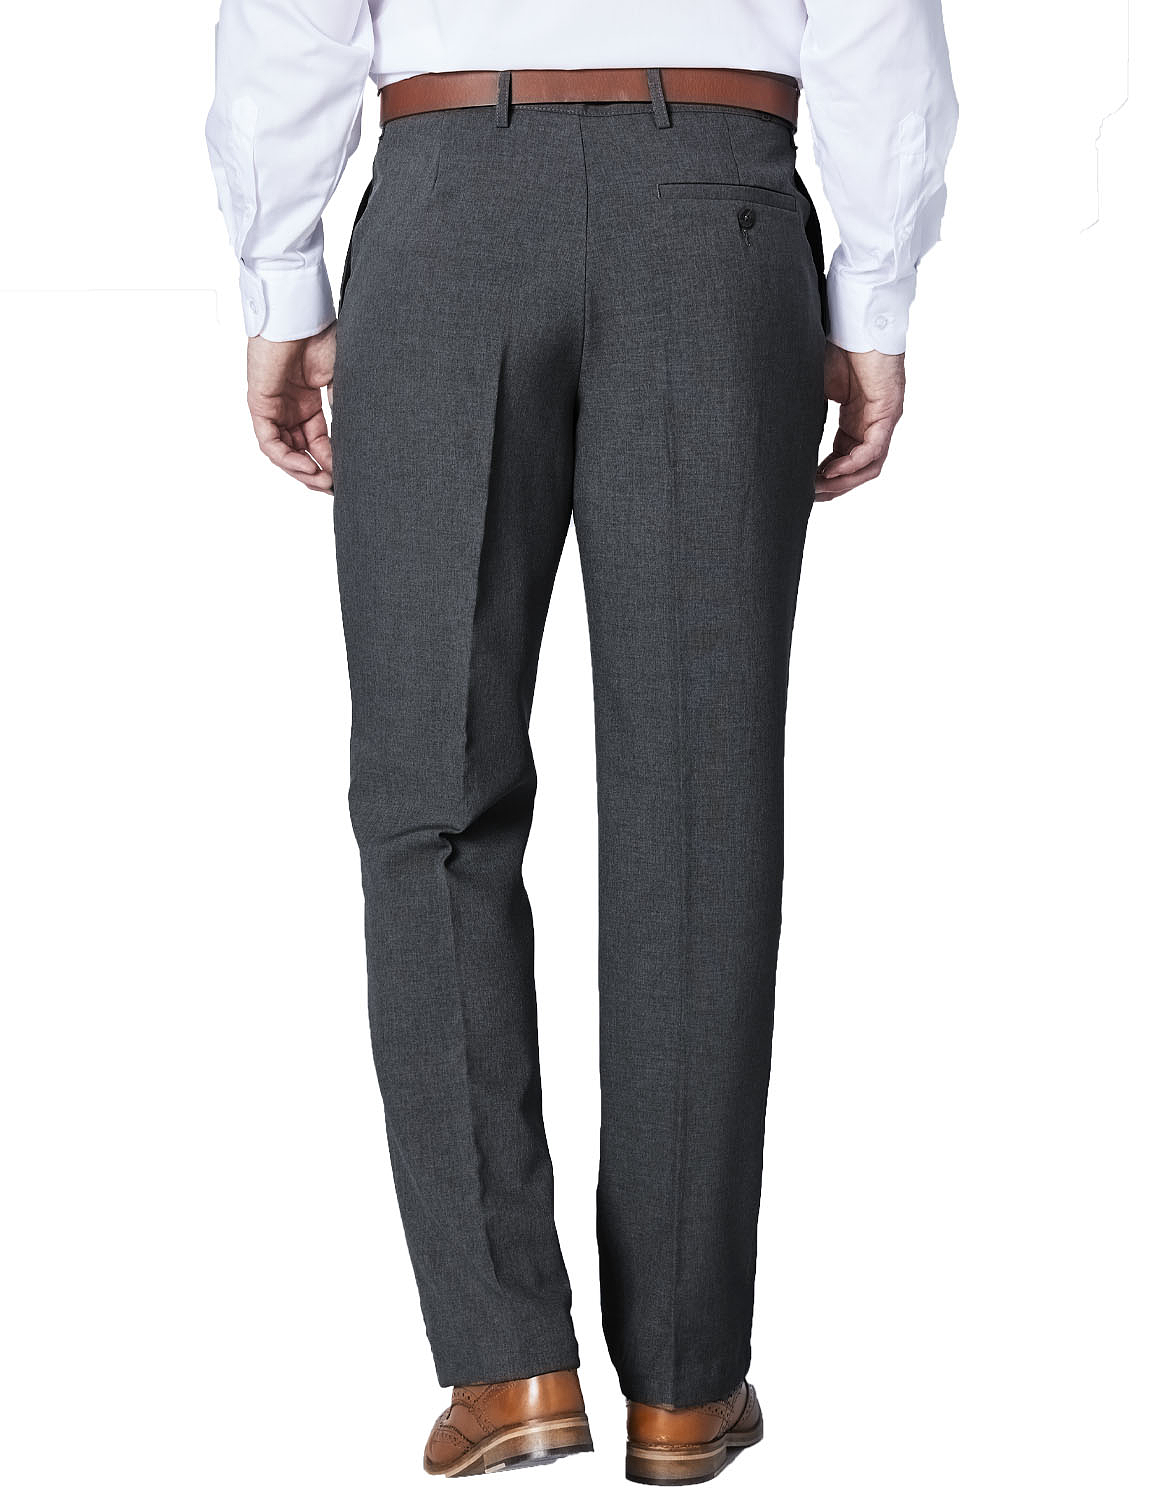 Mens High Waisted Lined Formal Trouser Pants | eBay